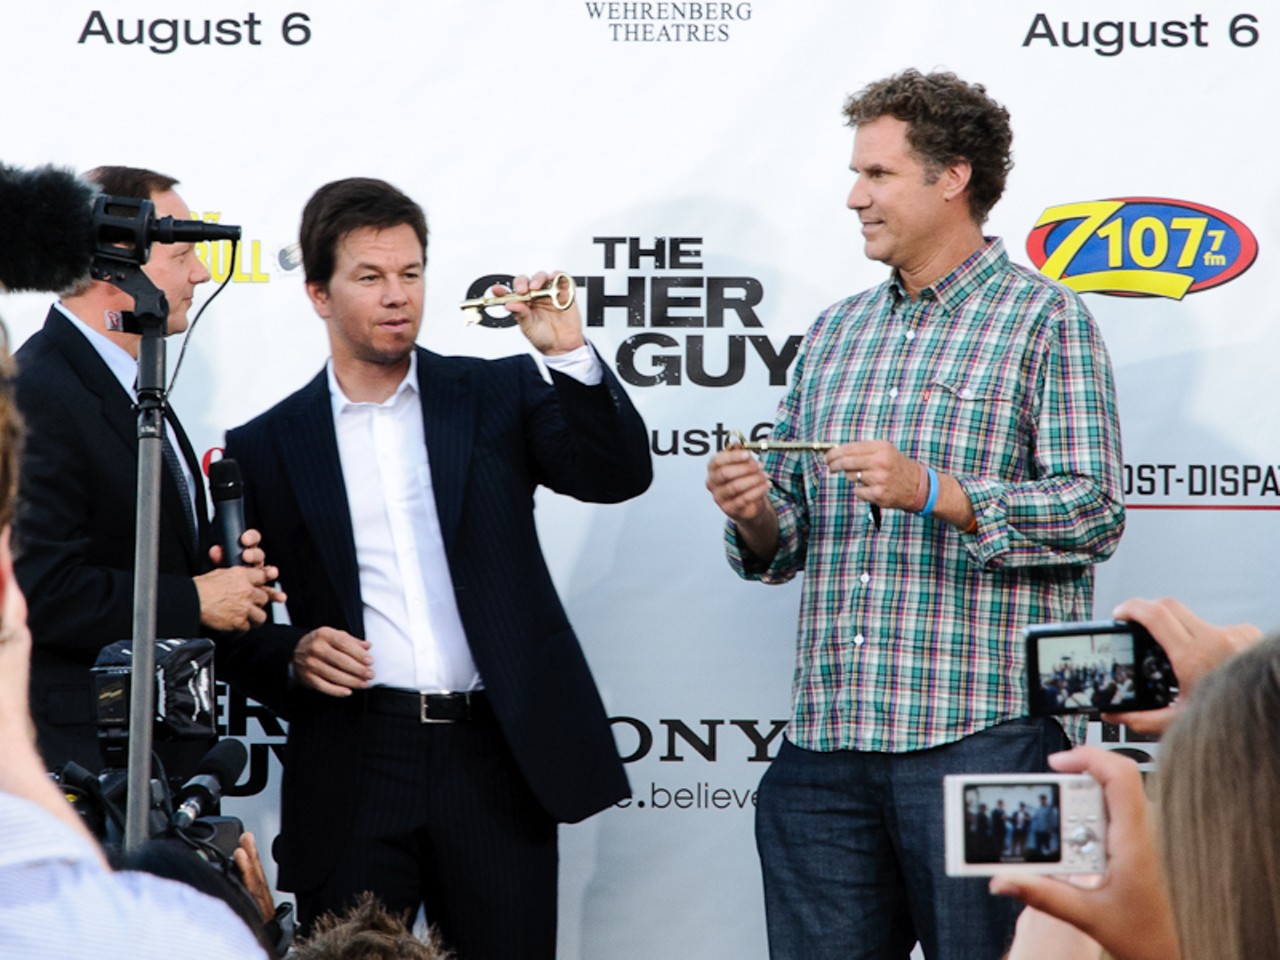 Mayor Slay presented both Mark Wahlberg and Will Ferrell keys to the city.